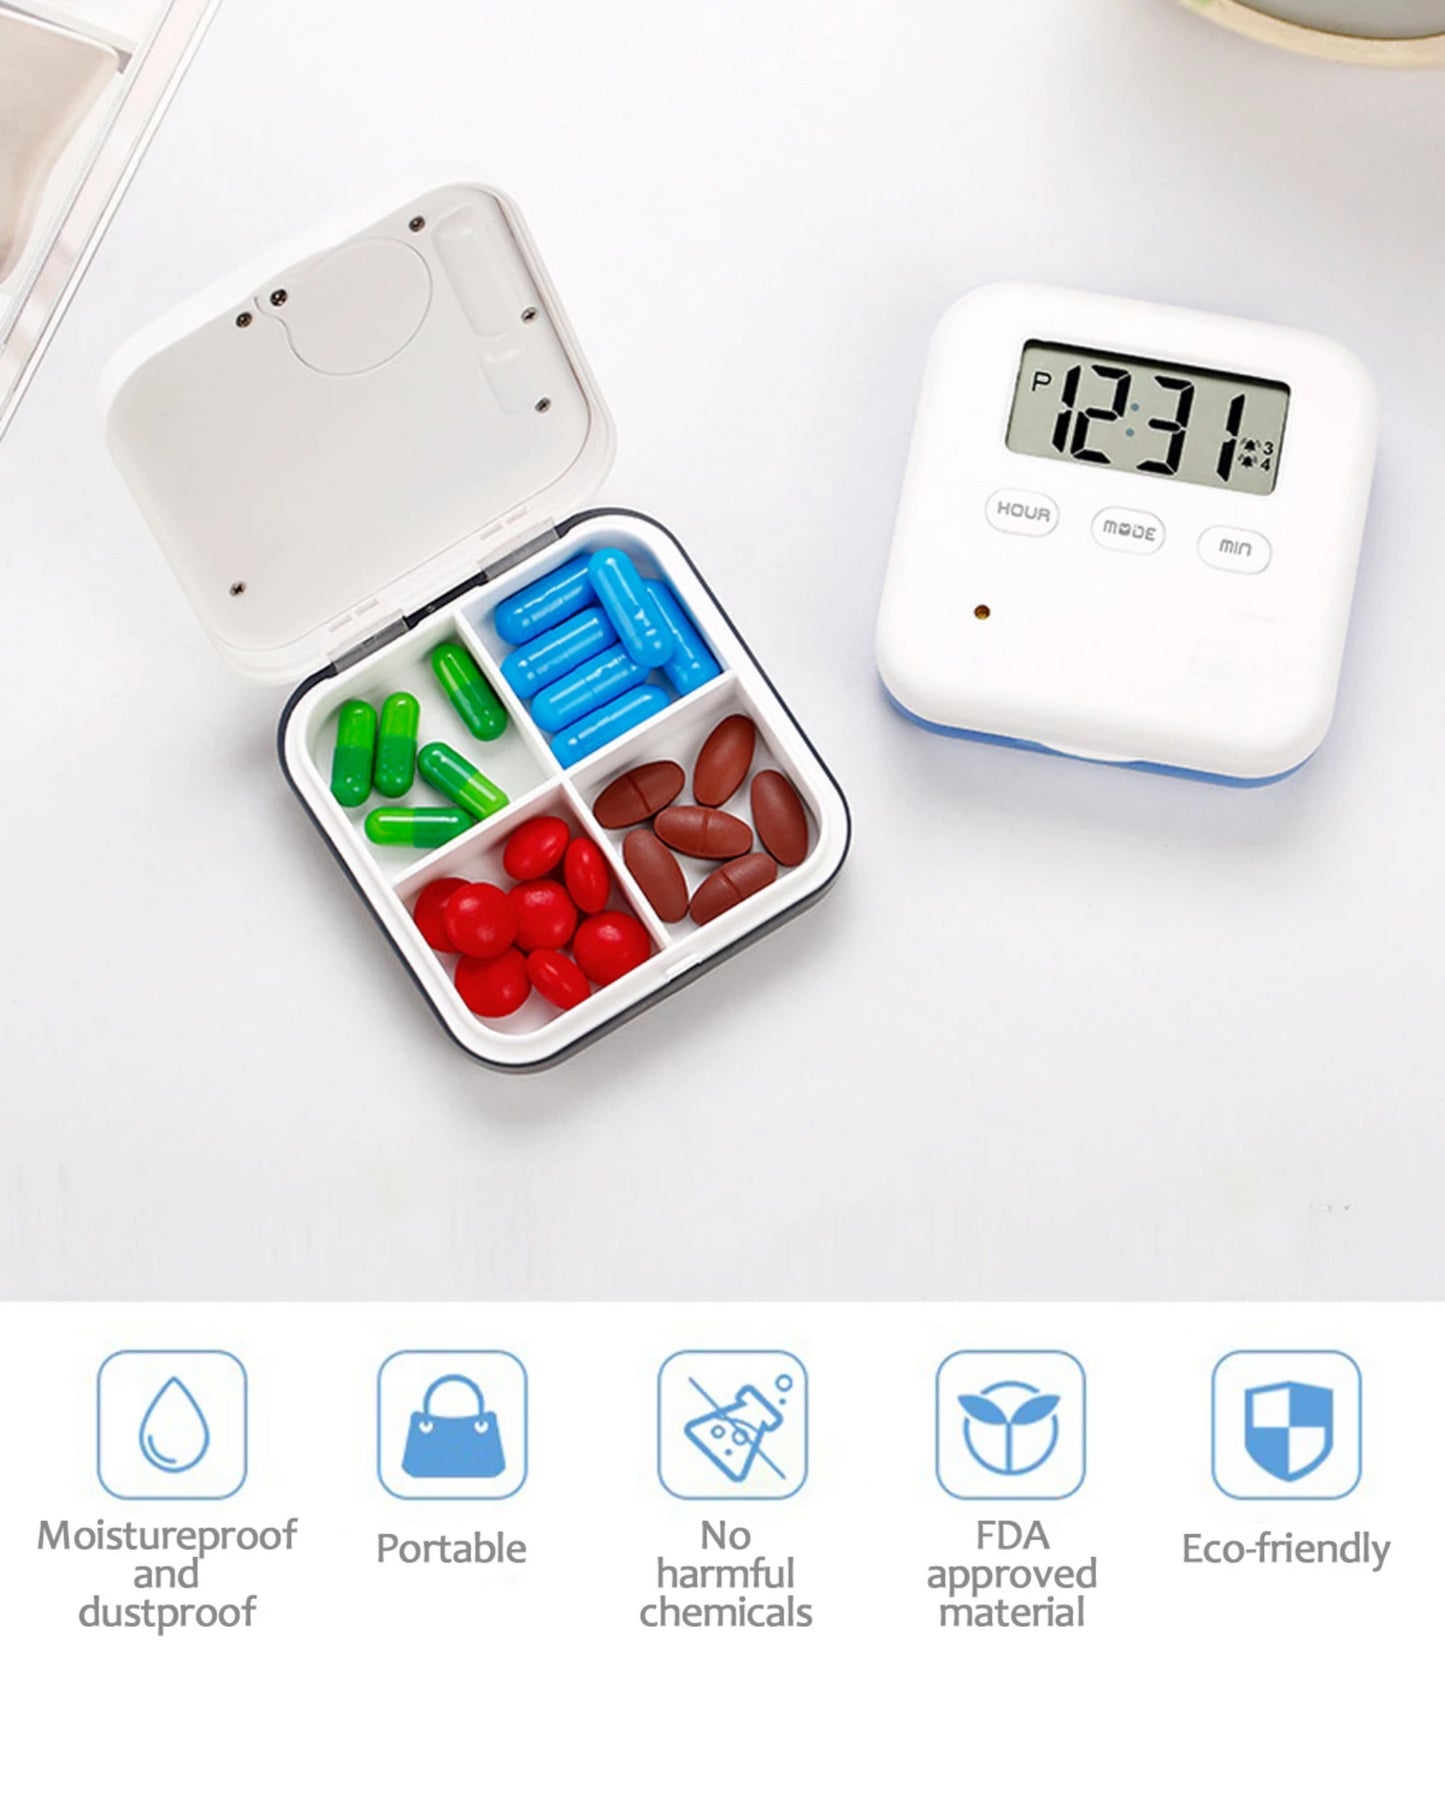 Jusinhel Alarm Pill Box - 4 Compartment - Blue